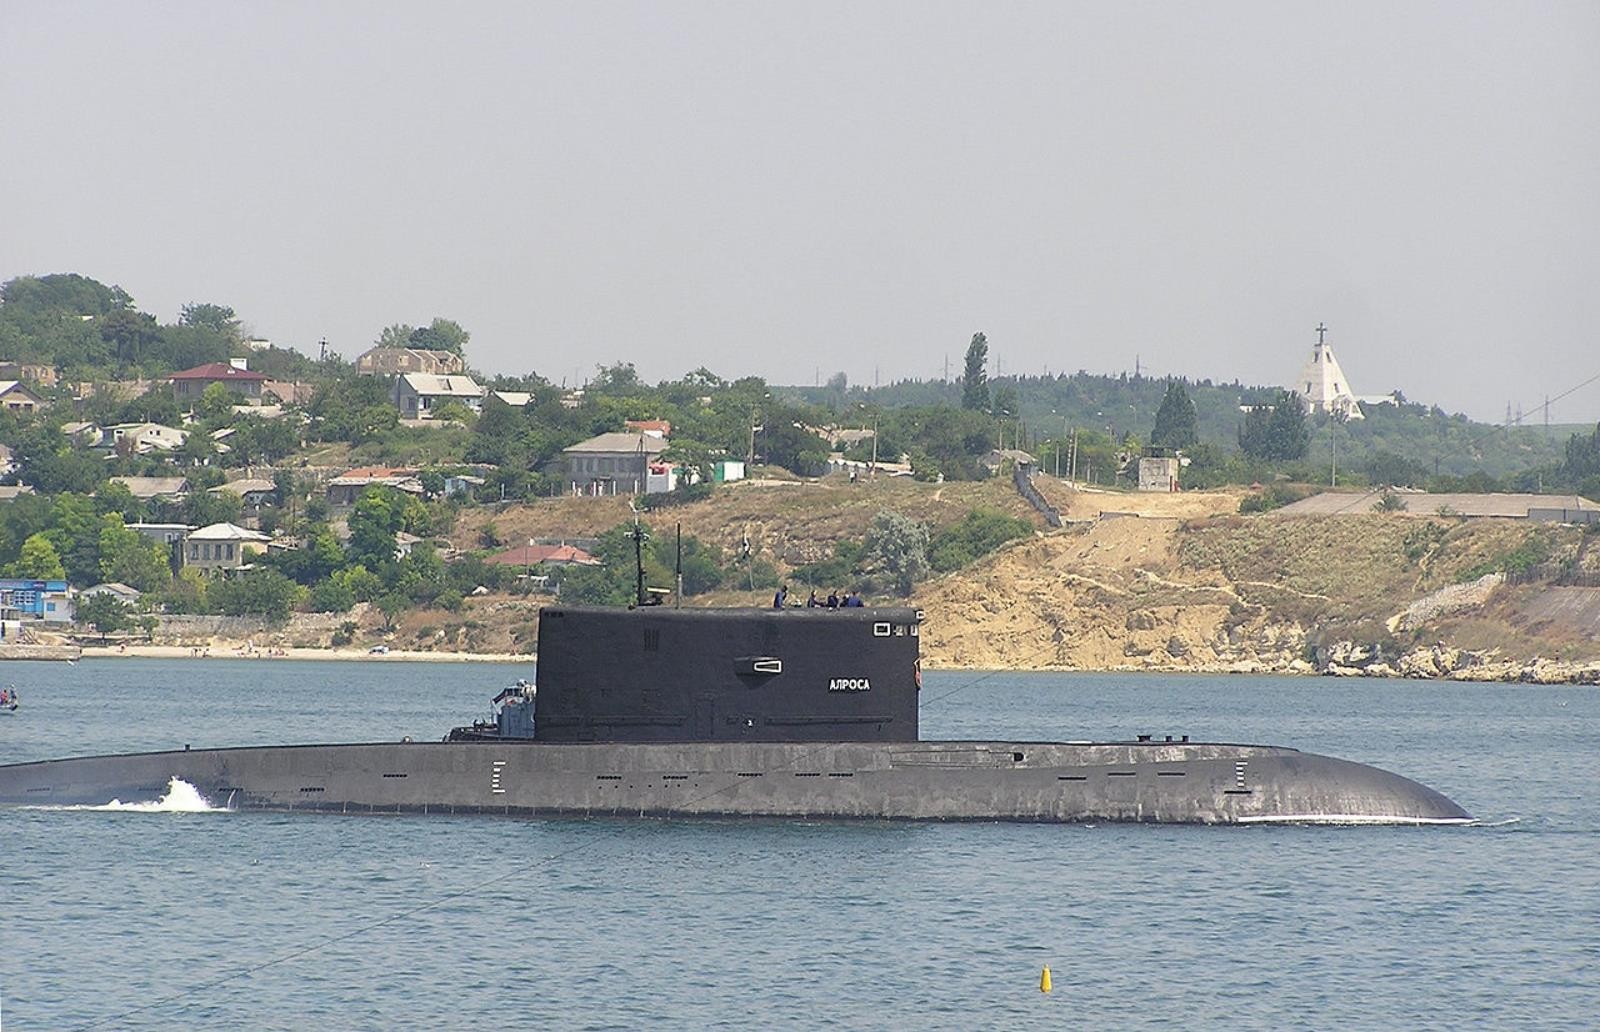 Rosyjski okręt podwodny Alrosa typu Kilo, Rosyjski okręt podwodny Alrosa